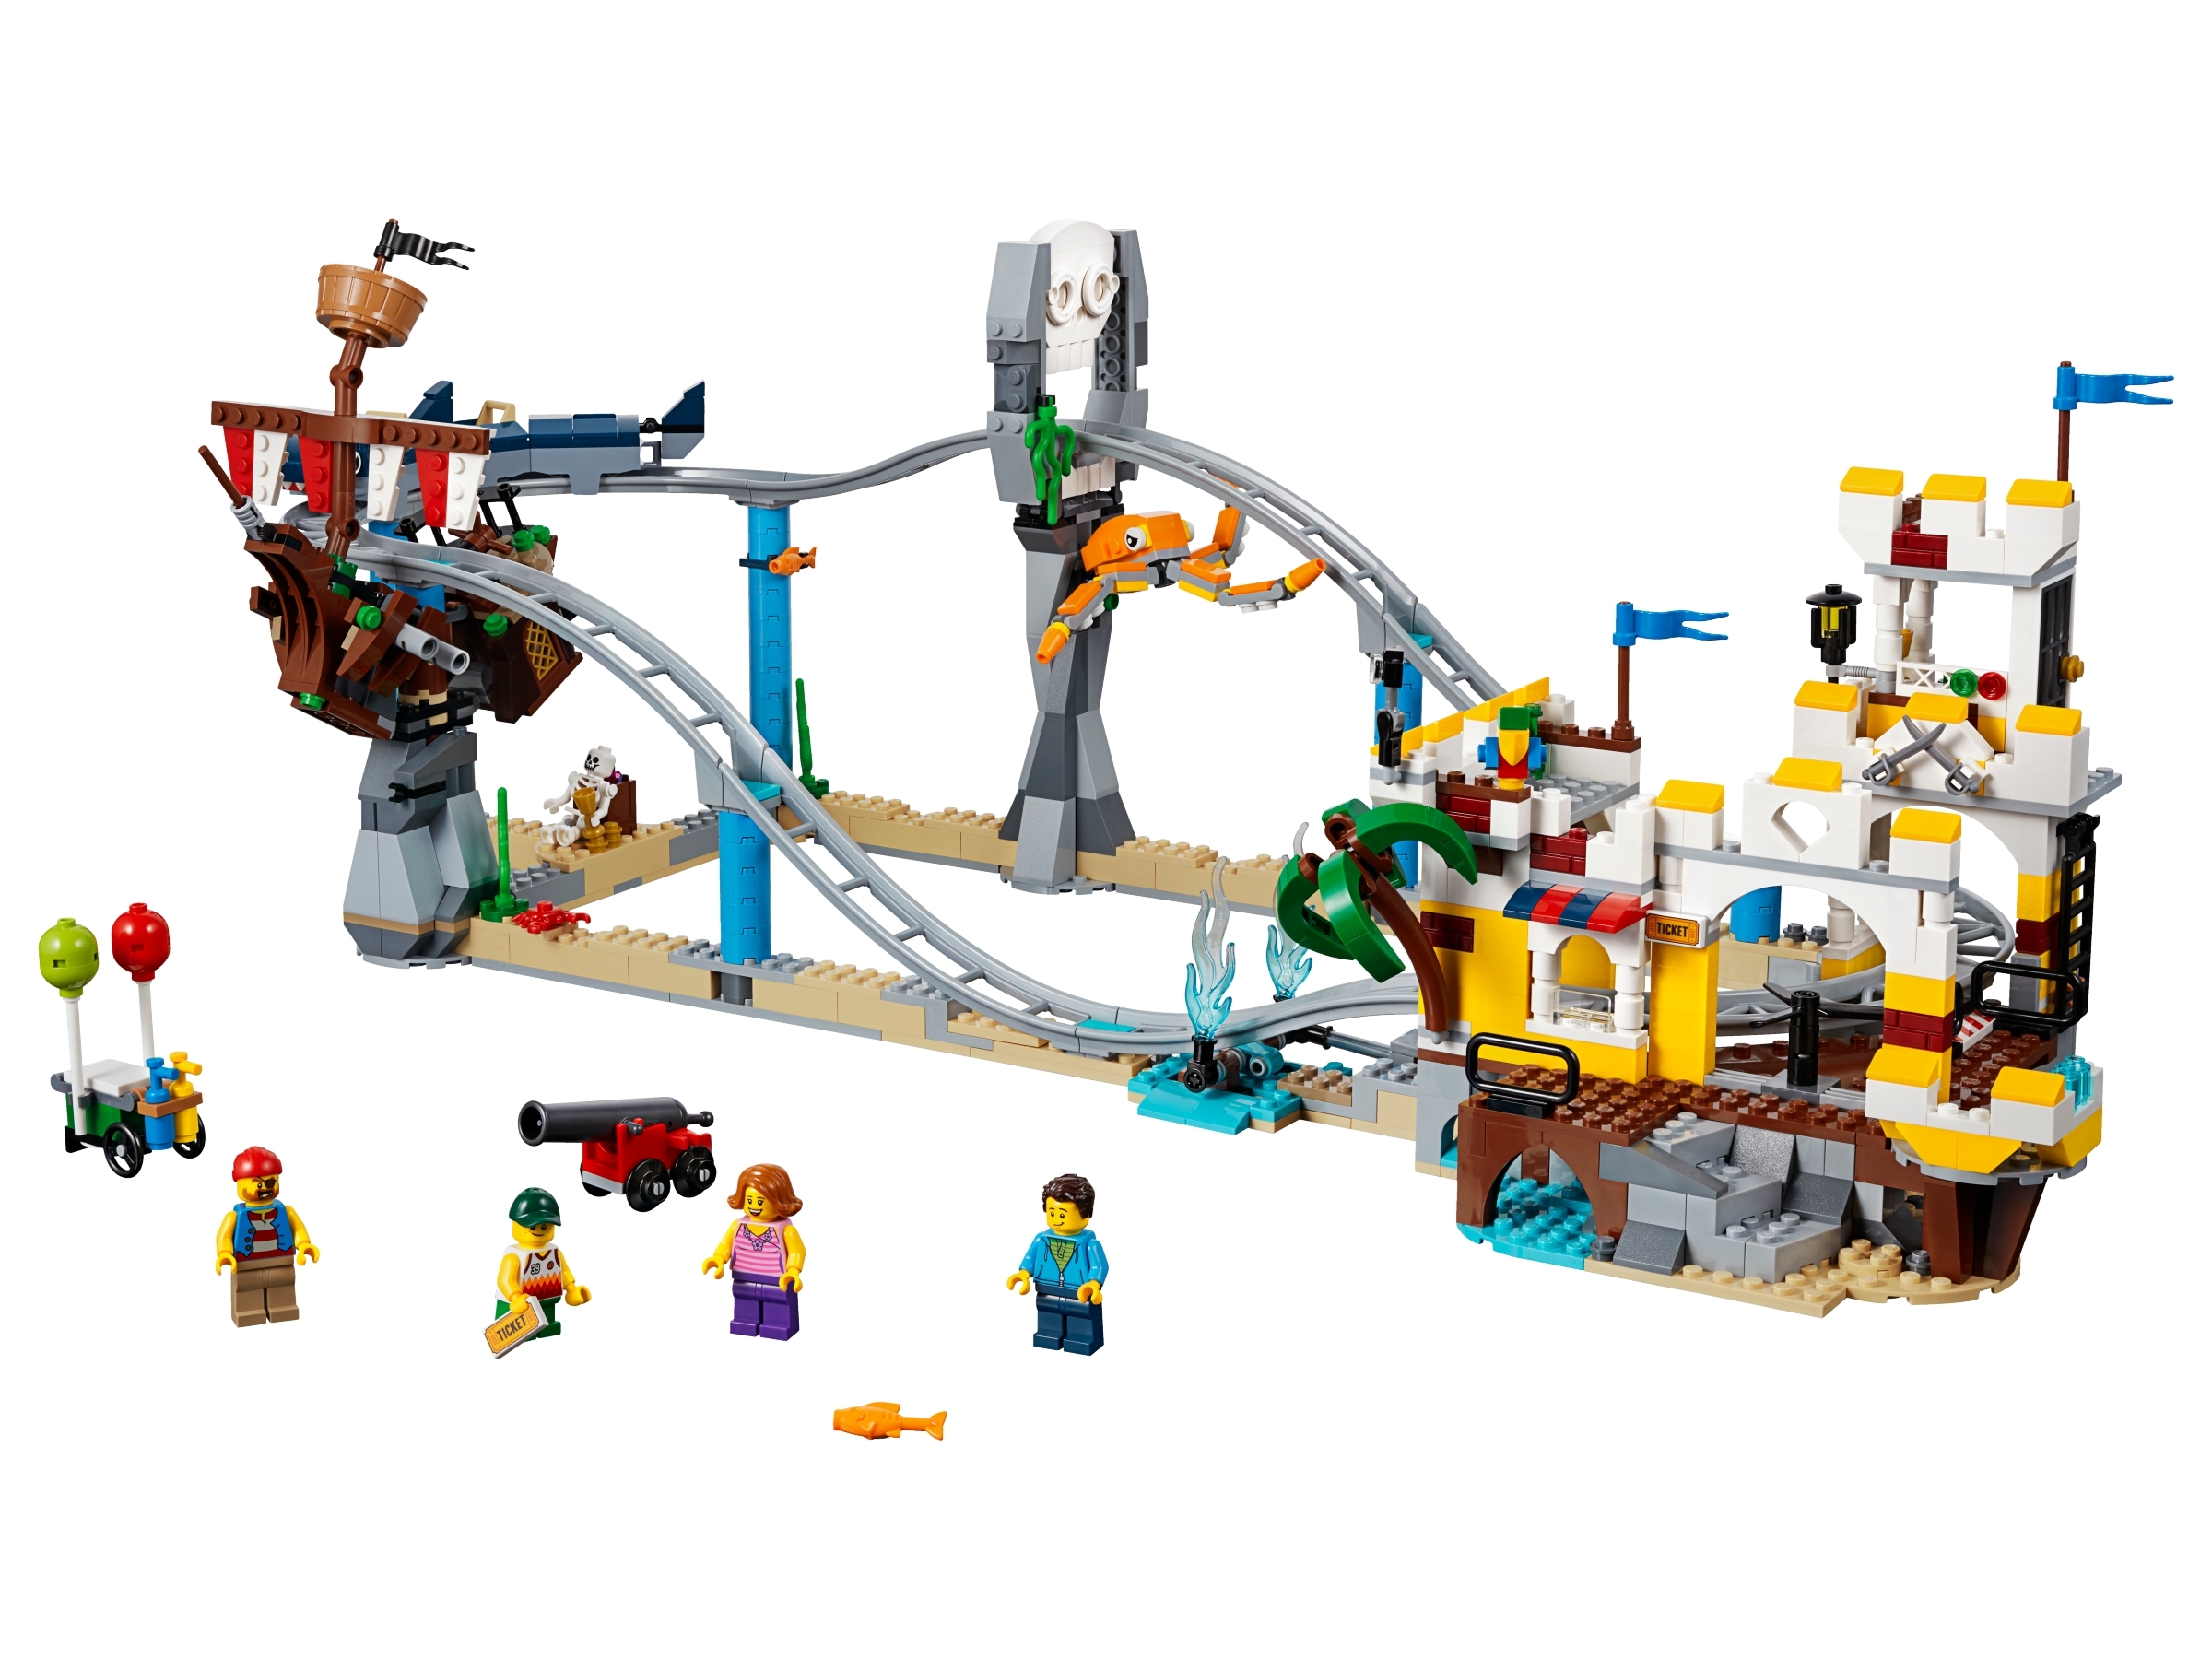 pirate lego roller coaster